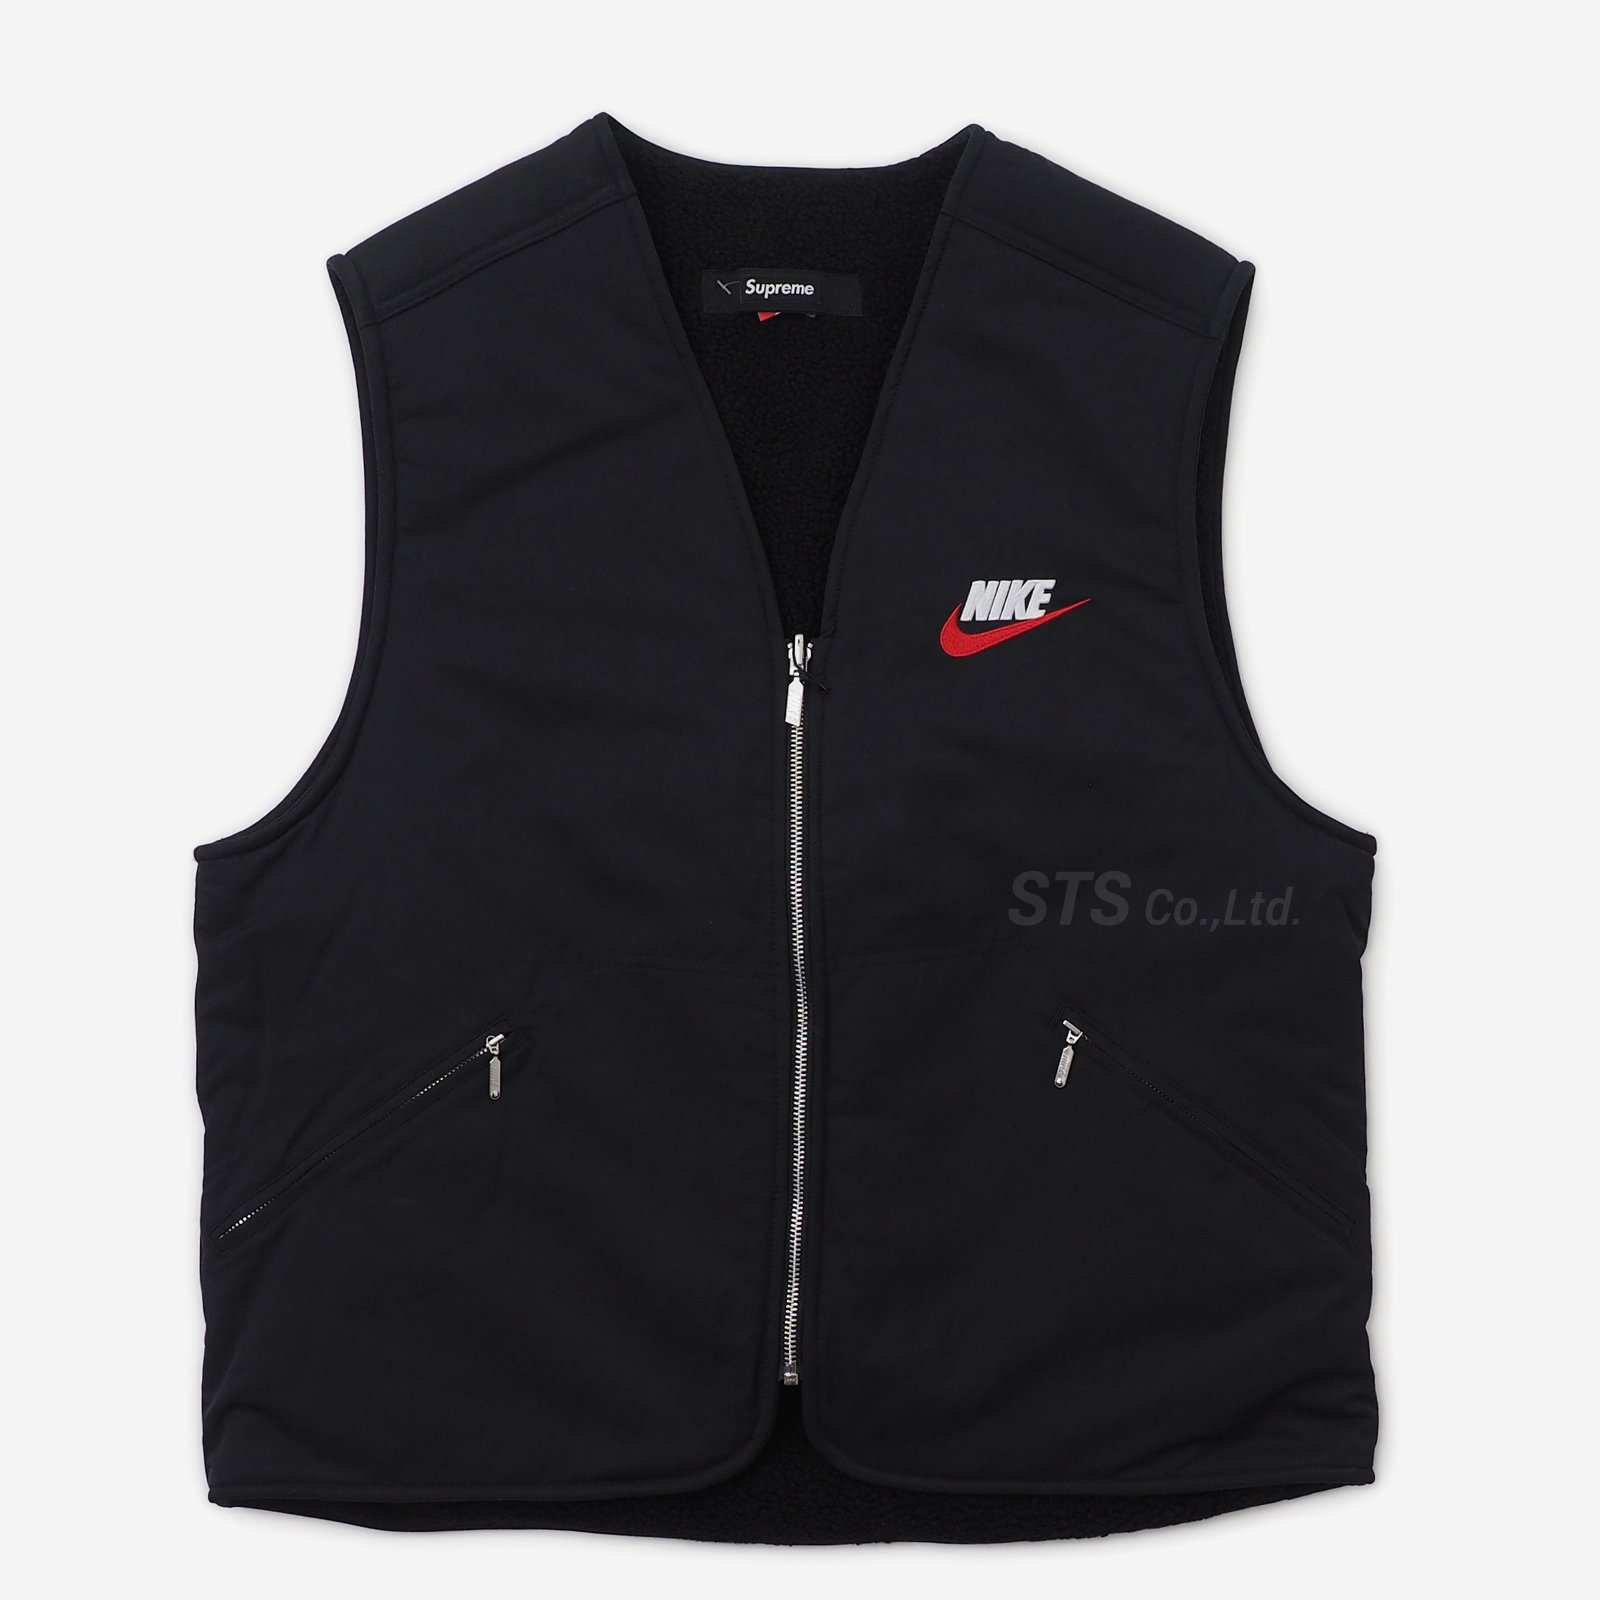 Supreme/Nike Reversible Nylon Sherpa Vest - UG.SHAFT